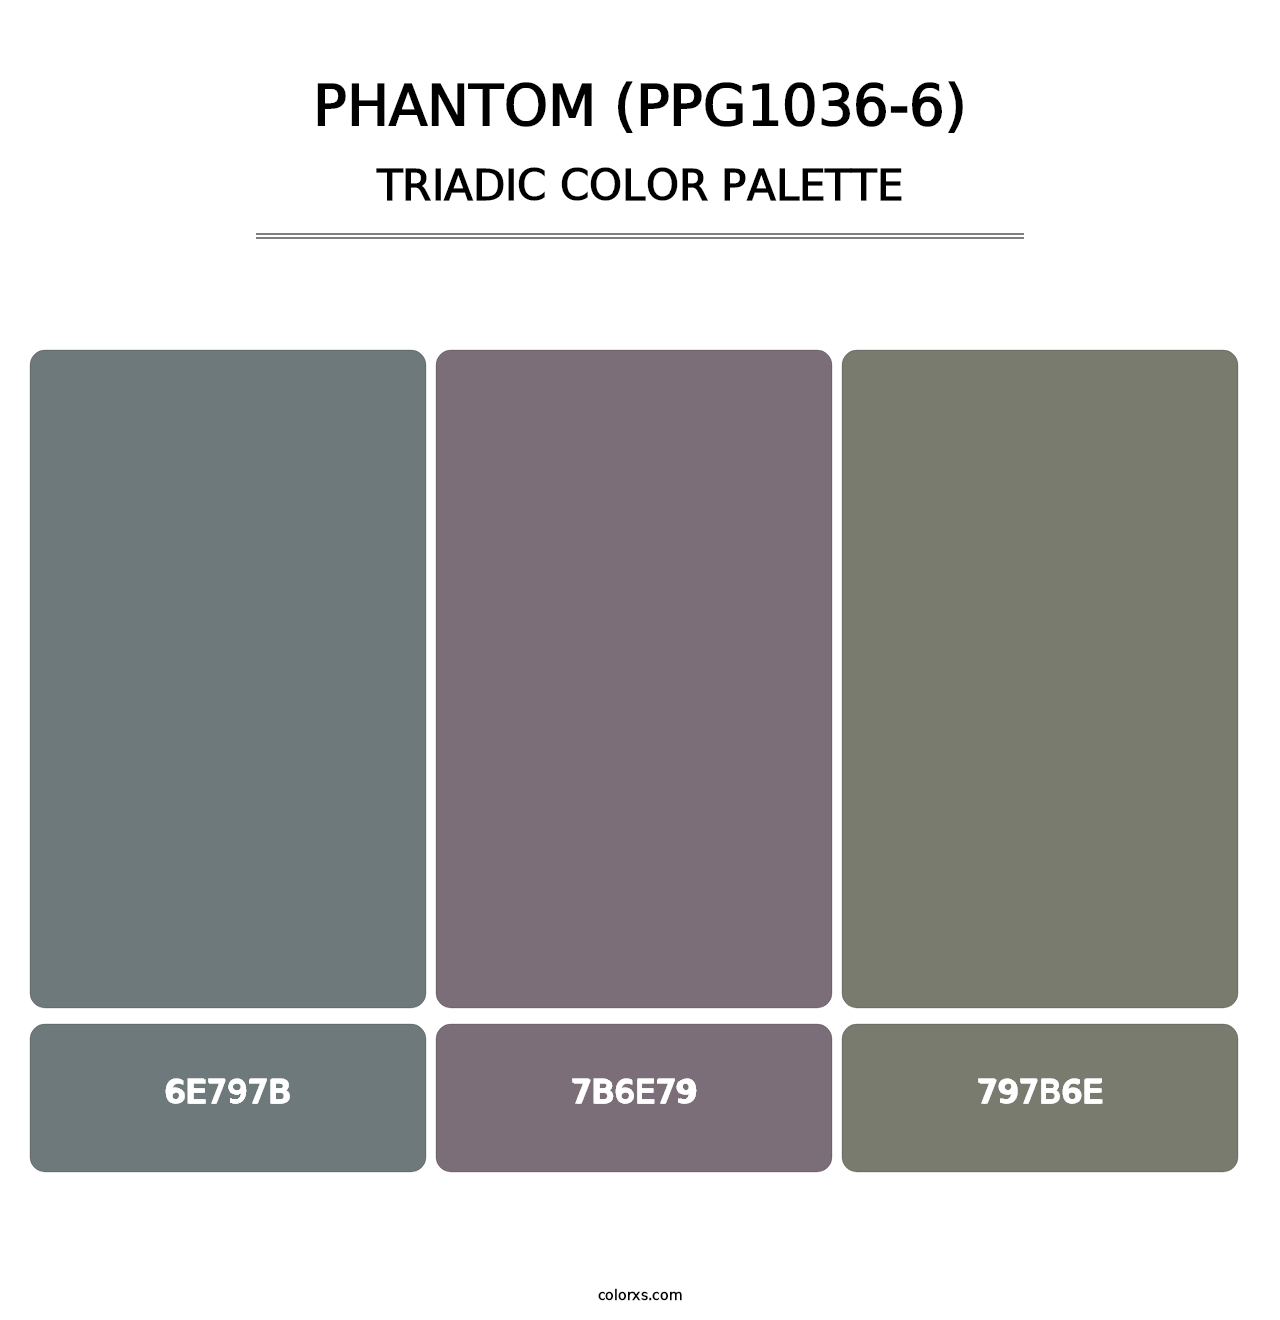 Phantom (PPG1036-6) - Triadic Color Palette